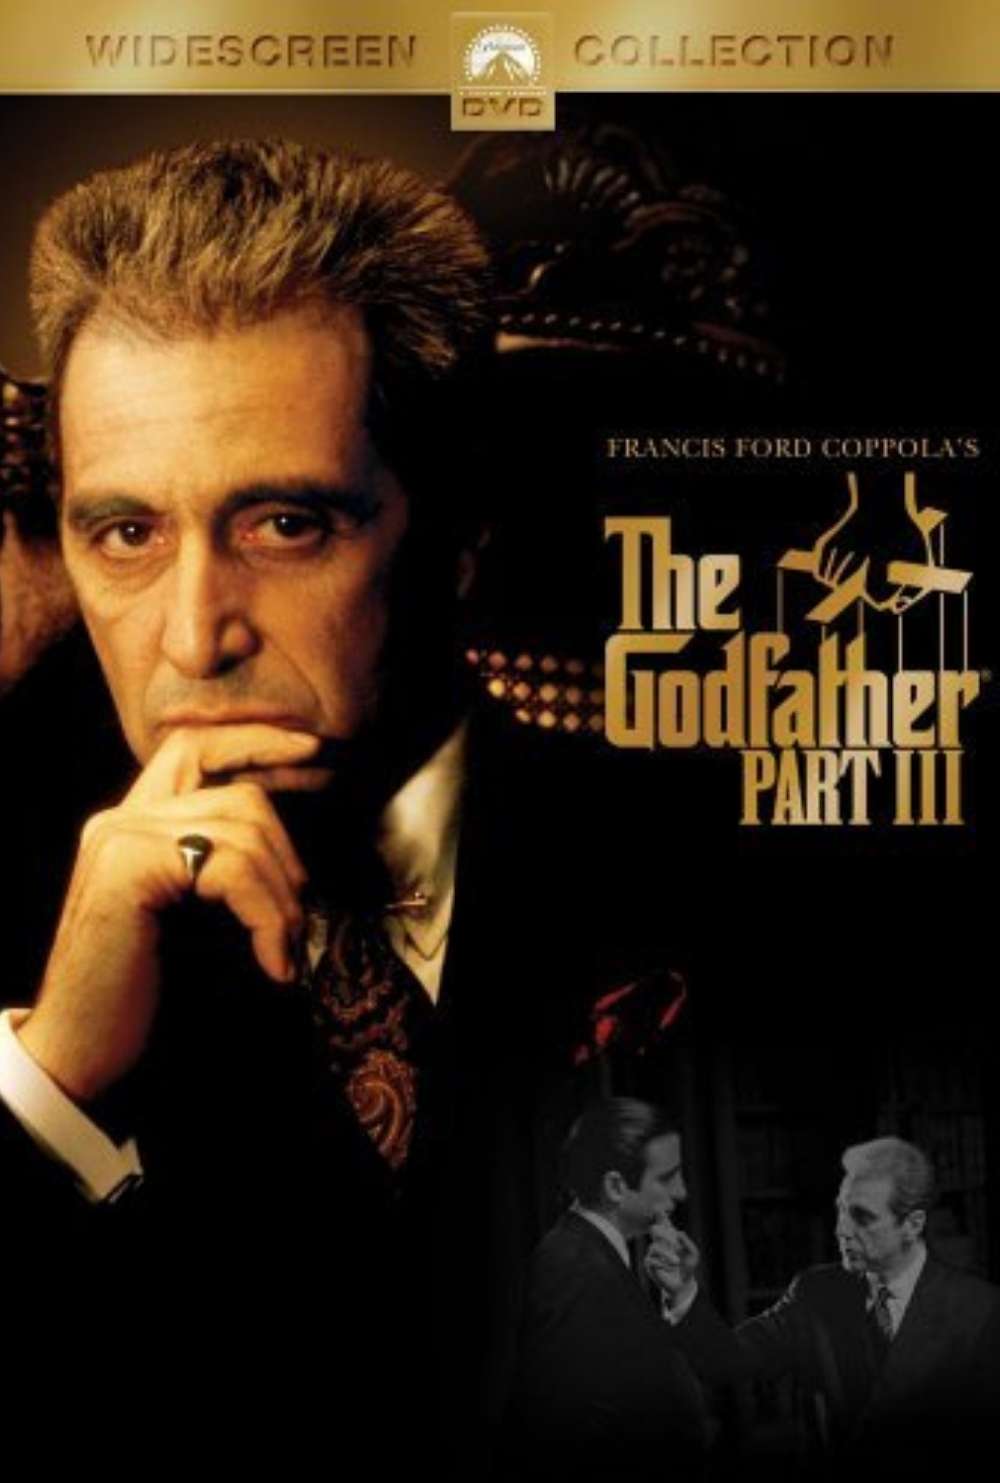 The Godfather Part III (1990) Best Italian Mafia Movies to Add in Your Watchlist